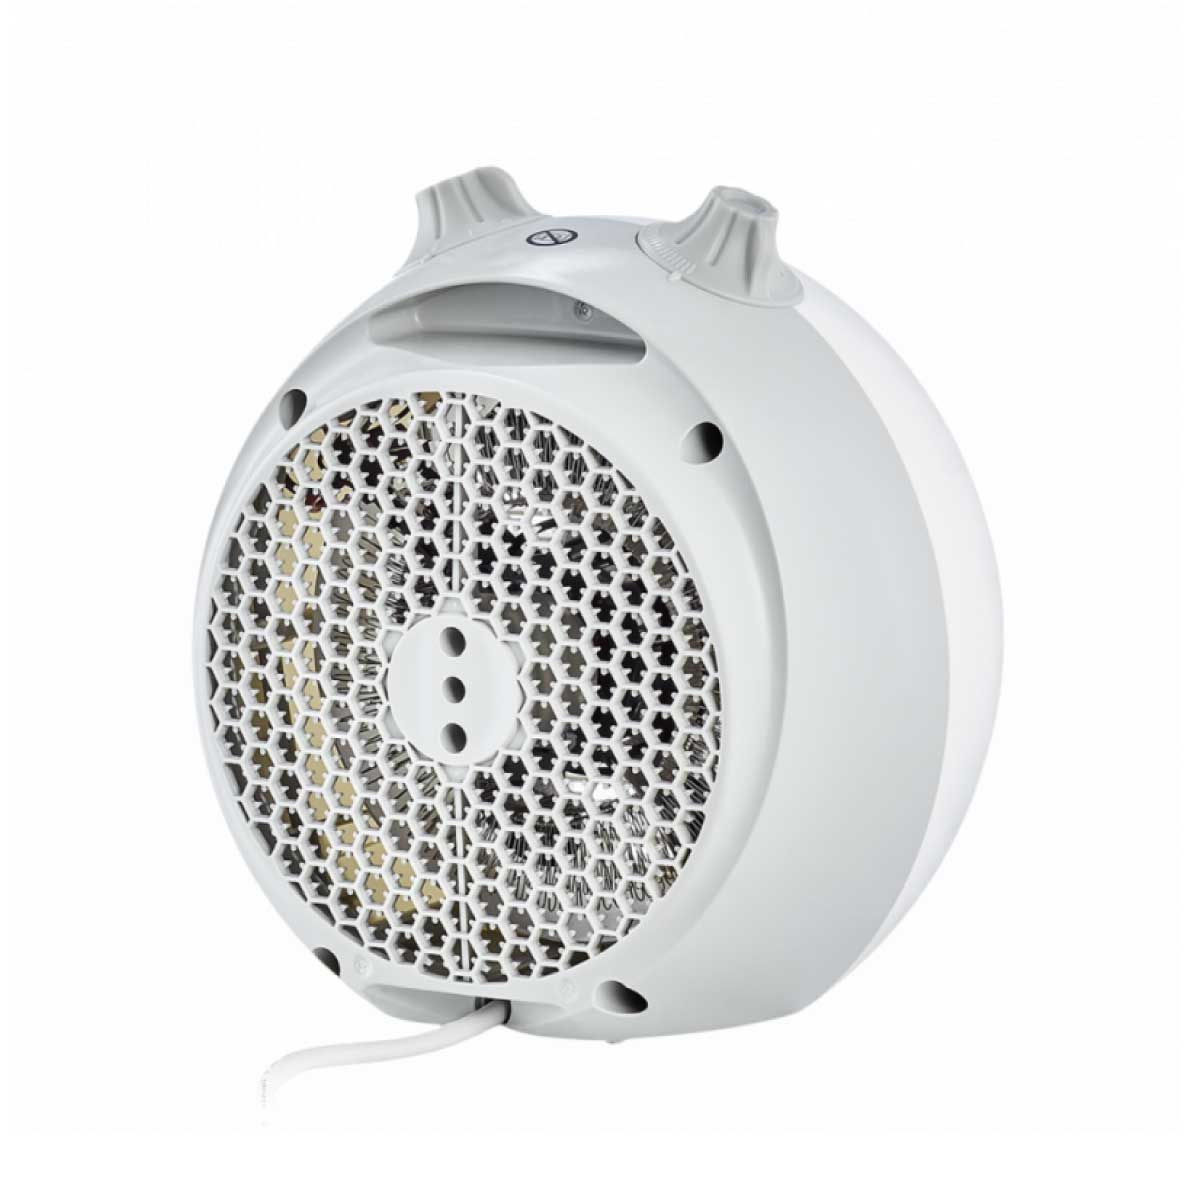 DIMPLEX เครื่องทำความร้อน Fan Heater DIMPLEX รุ่น DXUF-20TN